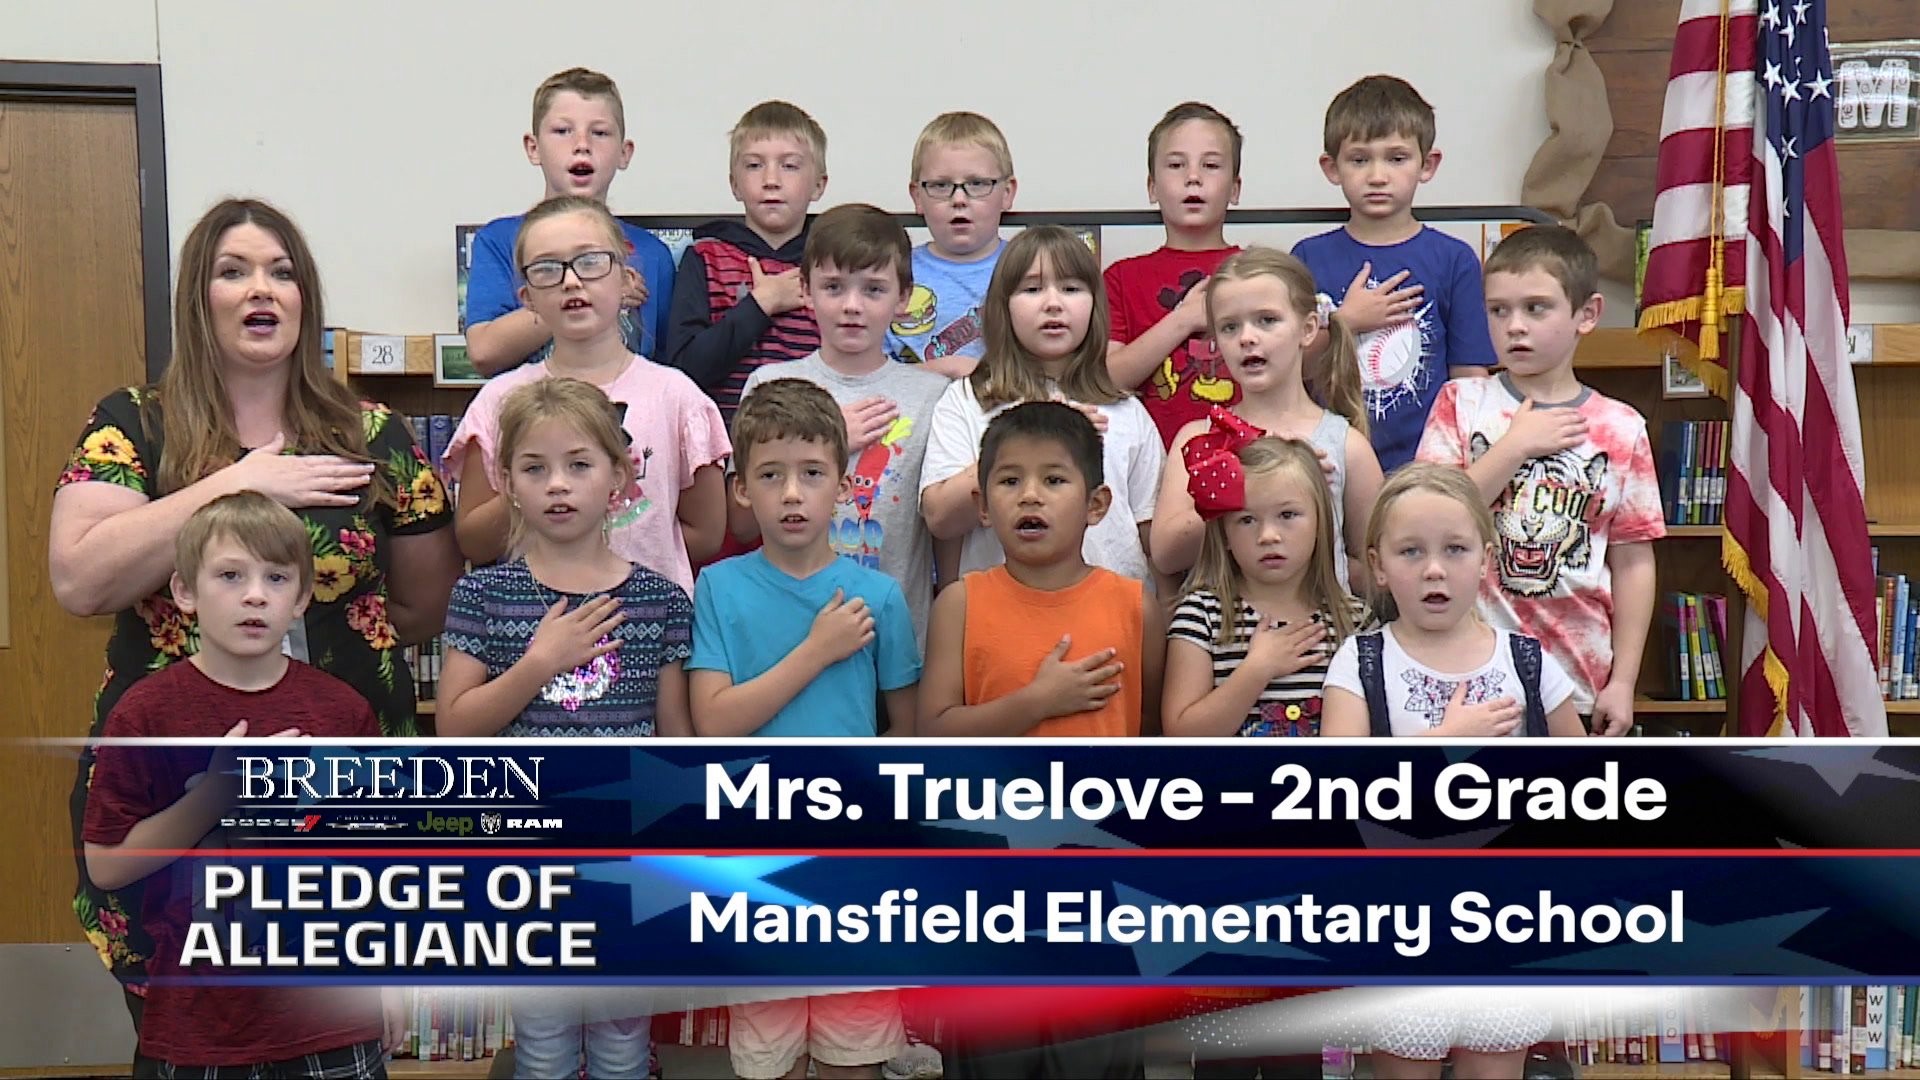 Mrs. Truelove 2nd Grade Mansfield Elementary School